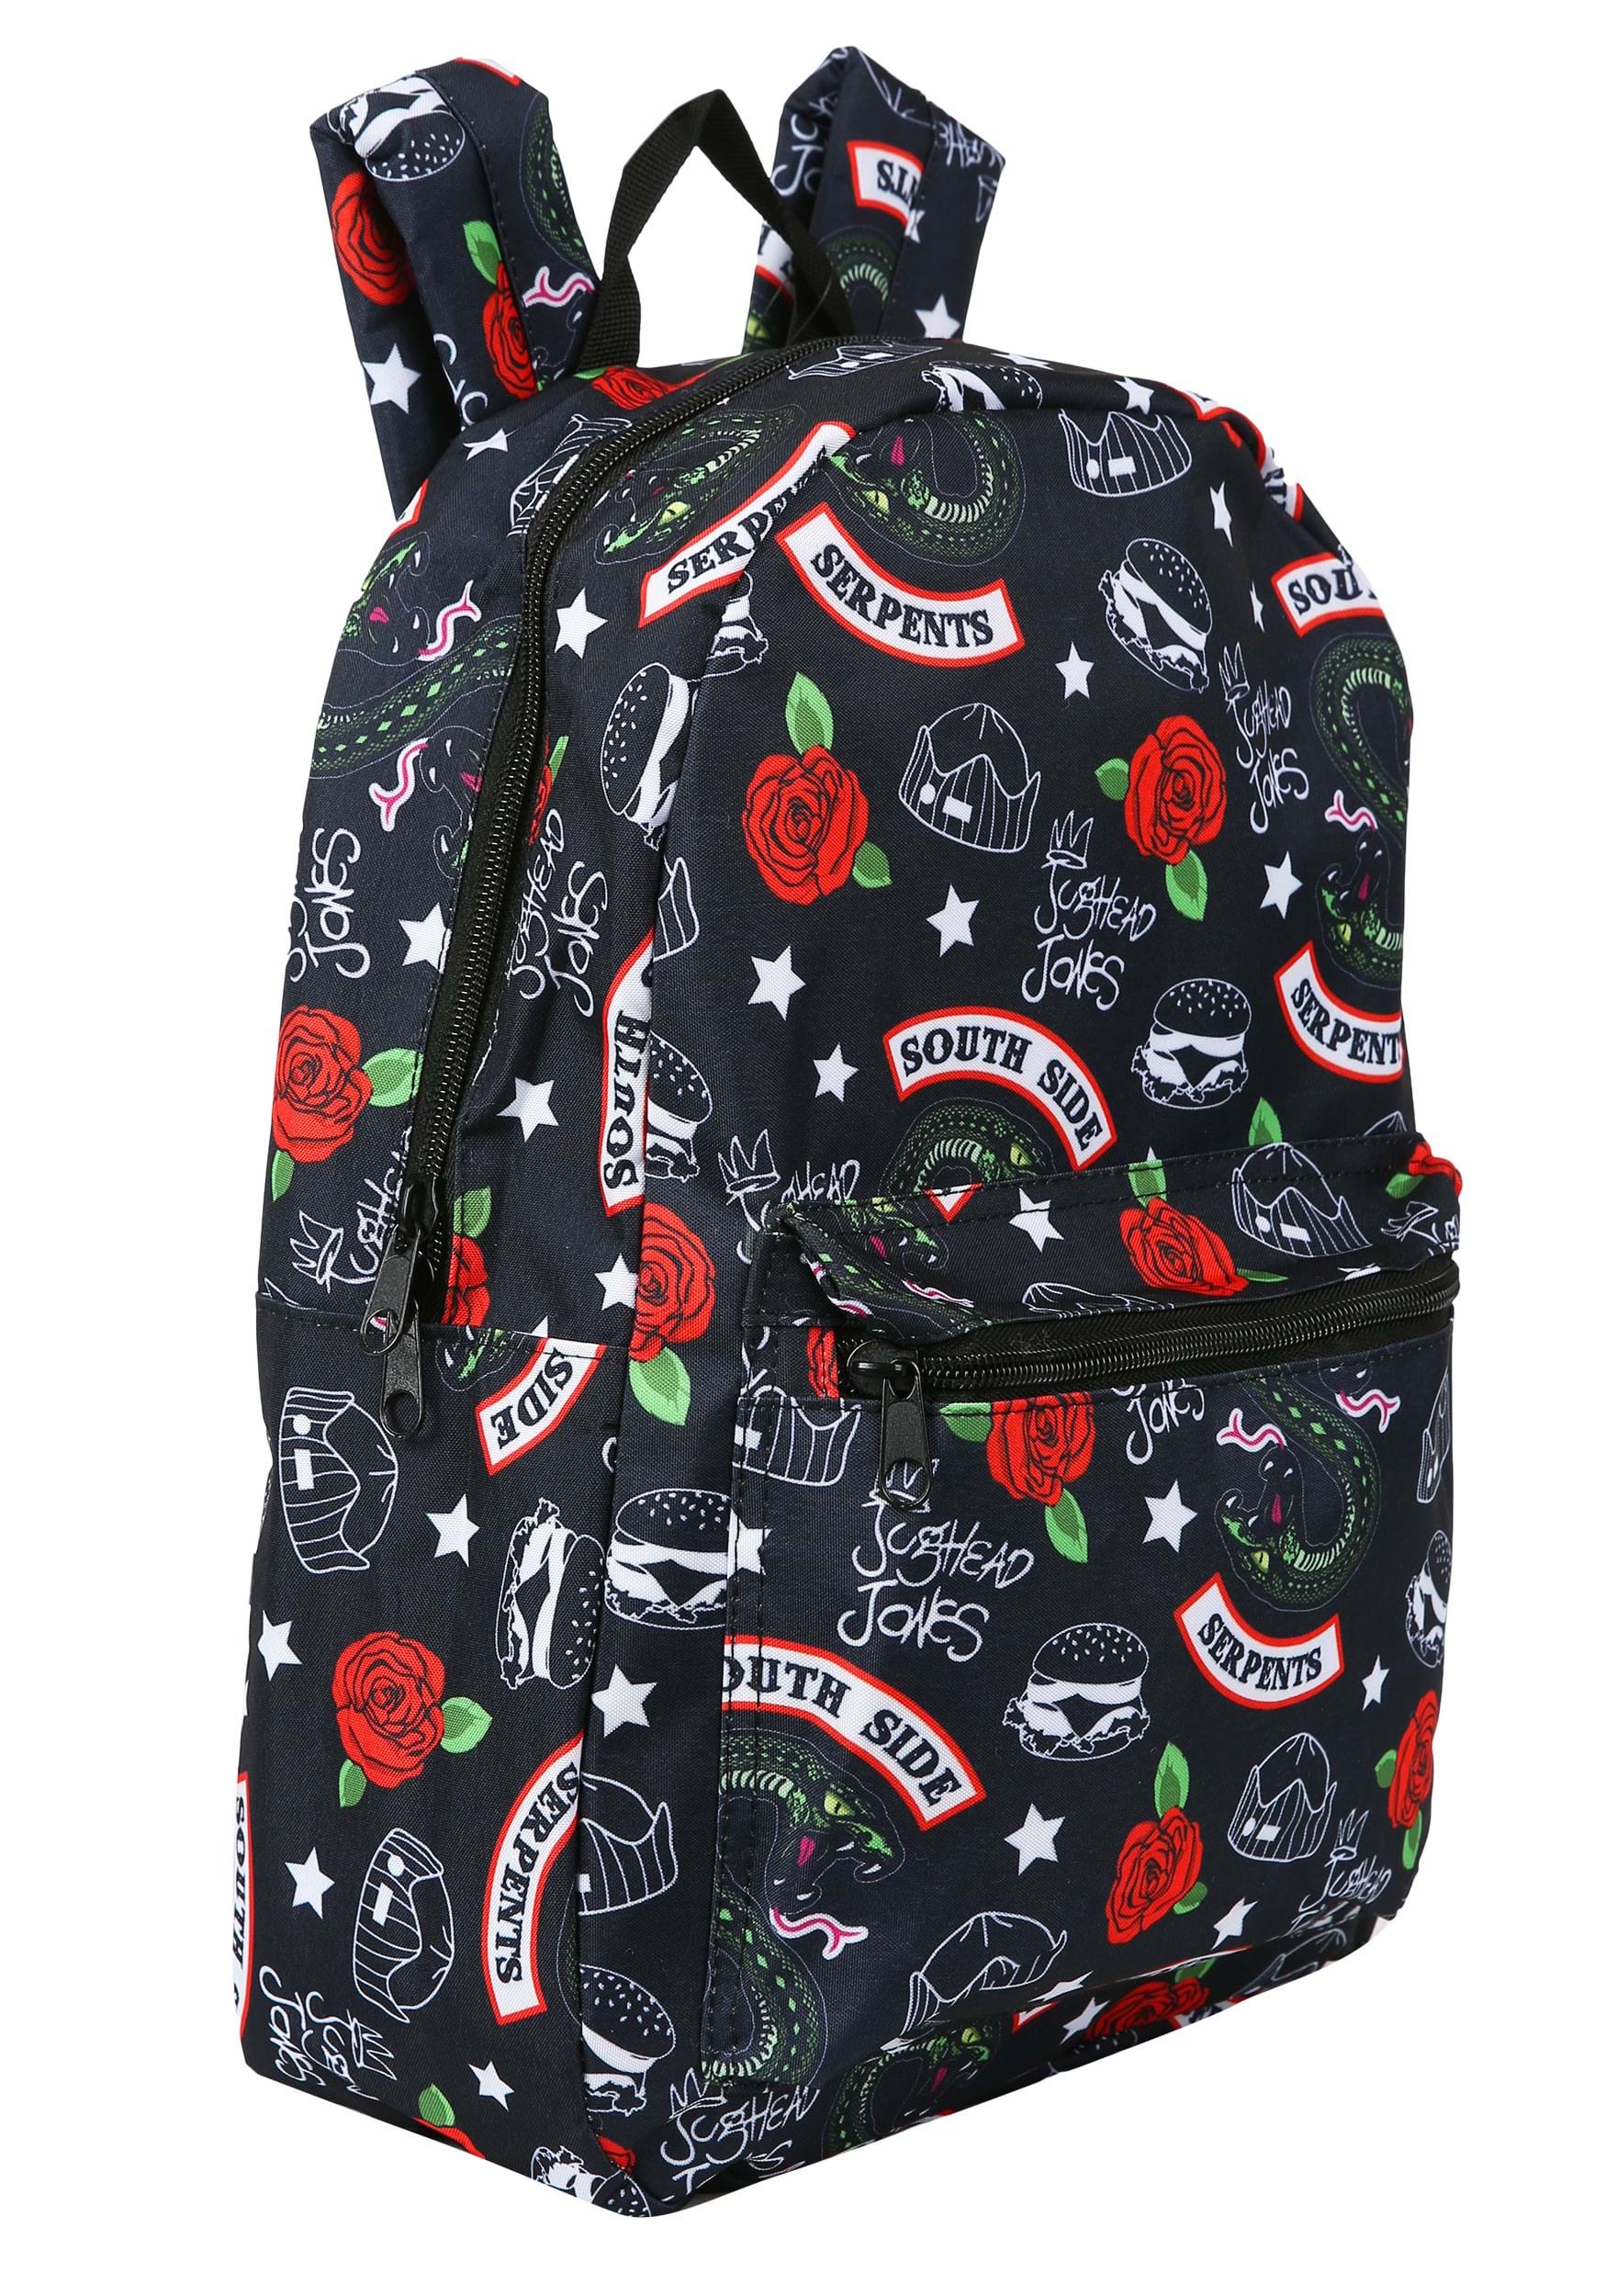 Riverdale Southside Serpents Backpack teenagers Schoolbag Men Mochila Laptop Bag 